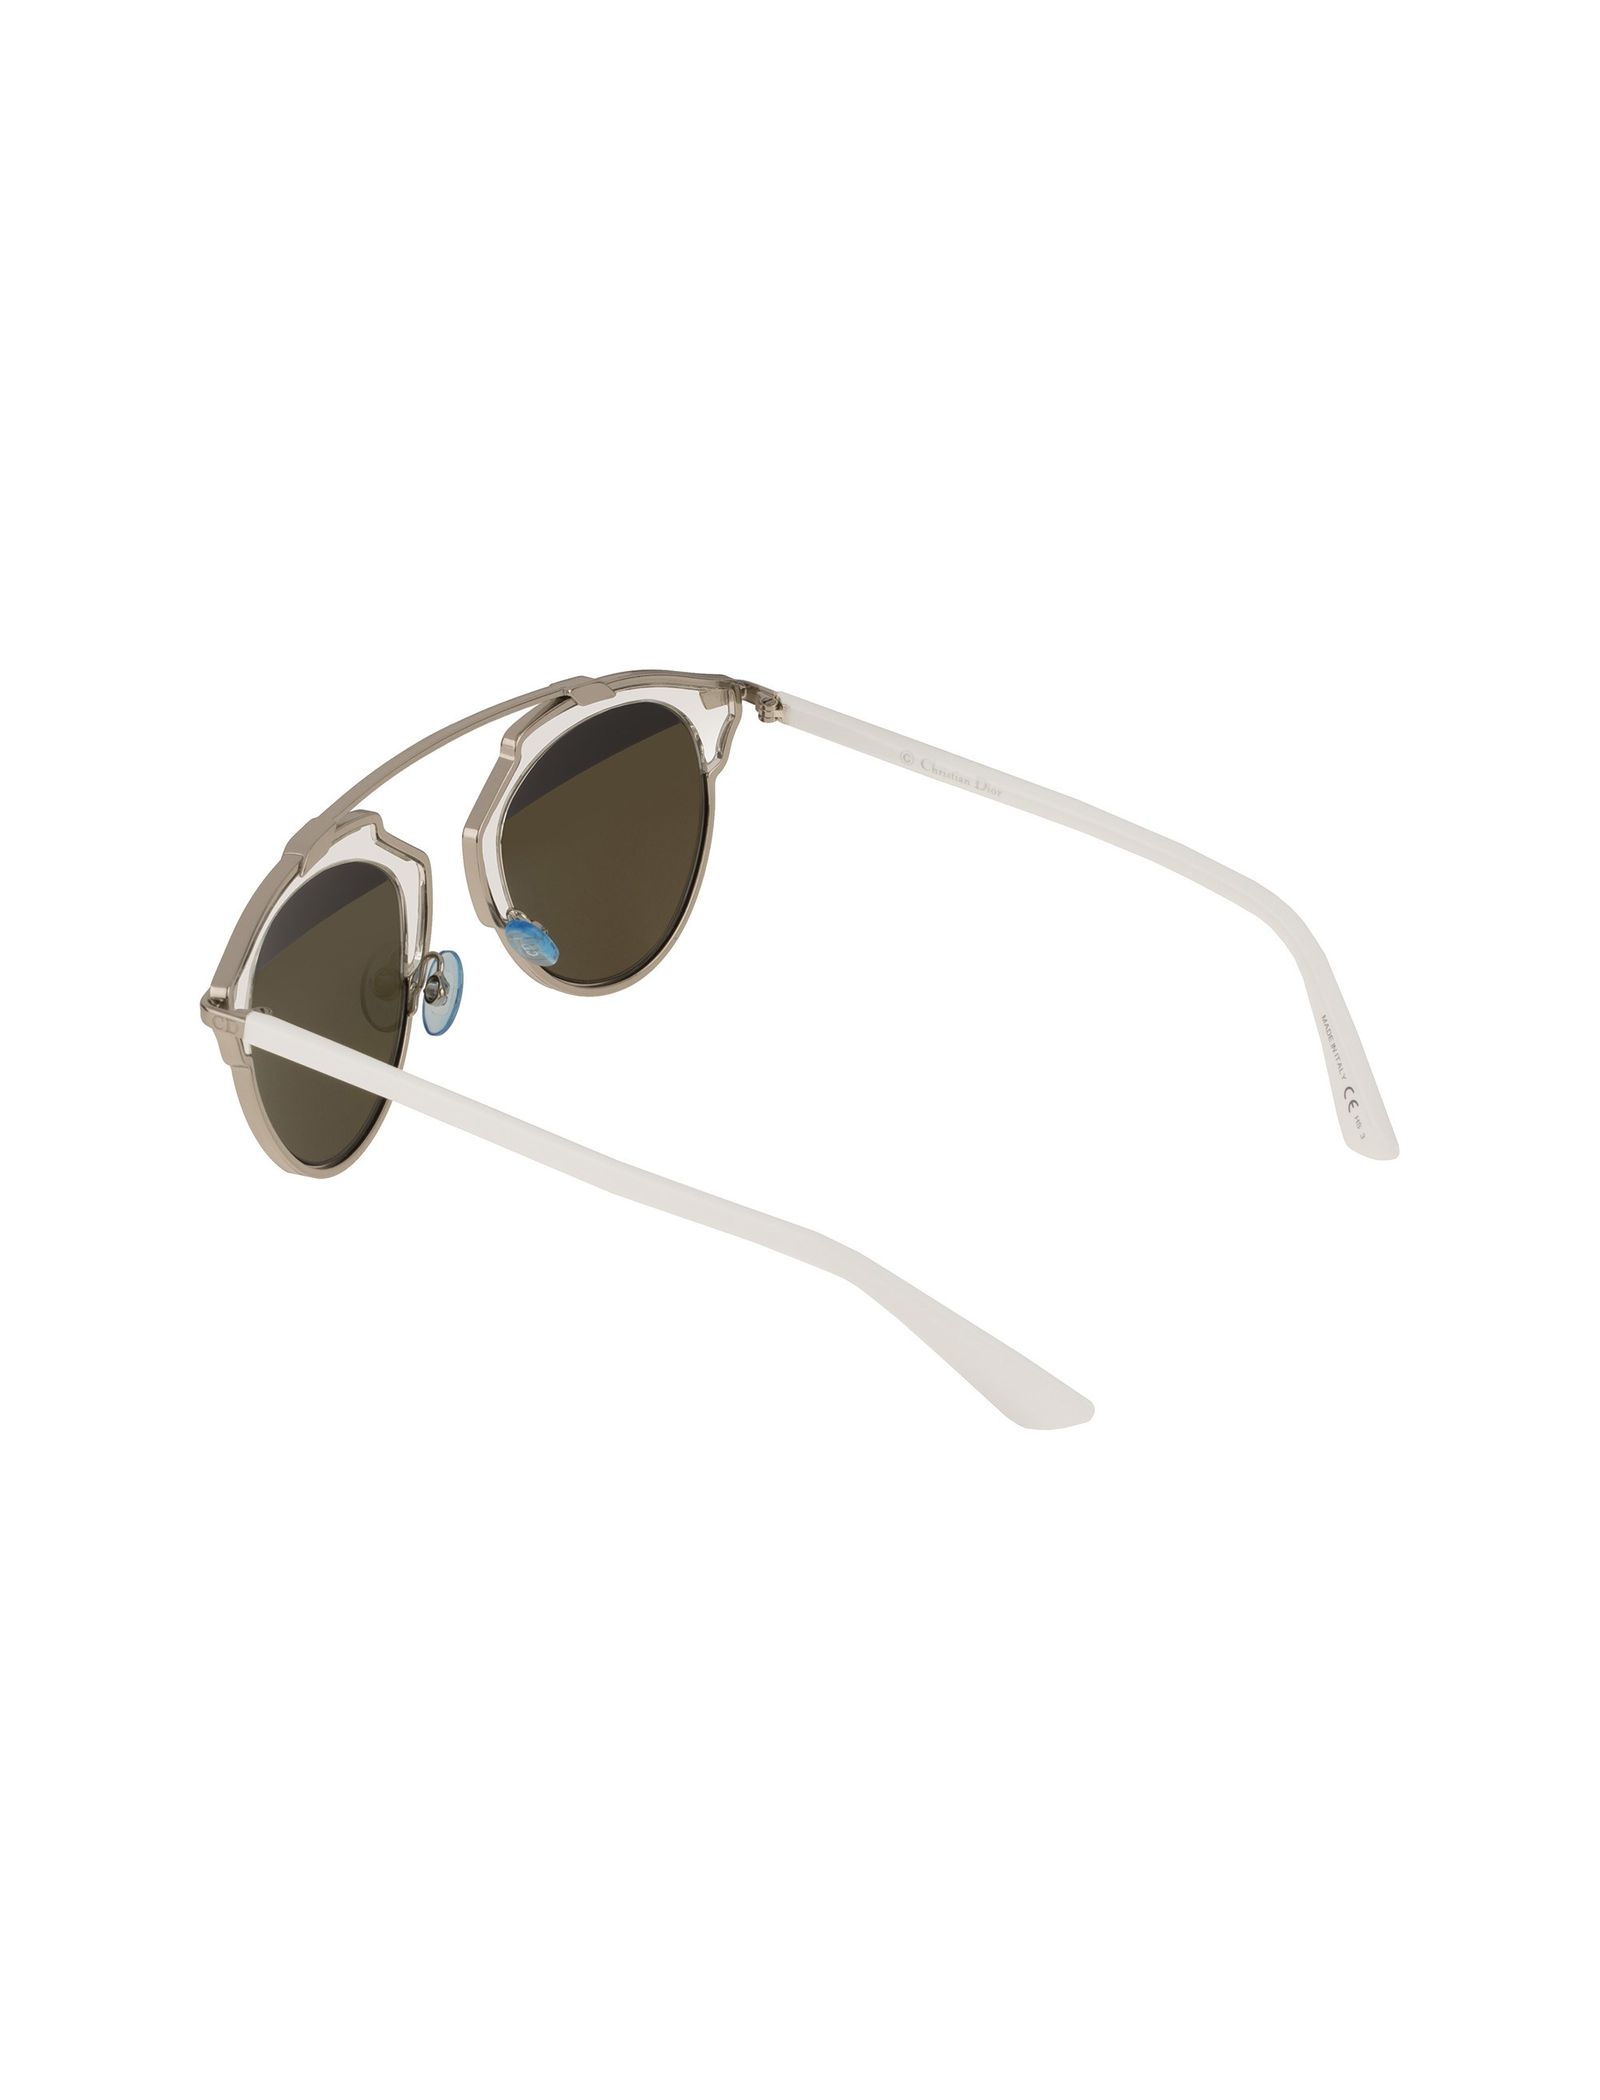 عینک آفتابی پنتوس زنانه - دیور - نقره اي و سفيد - 5